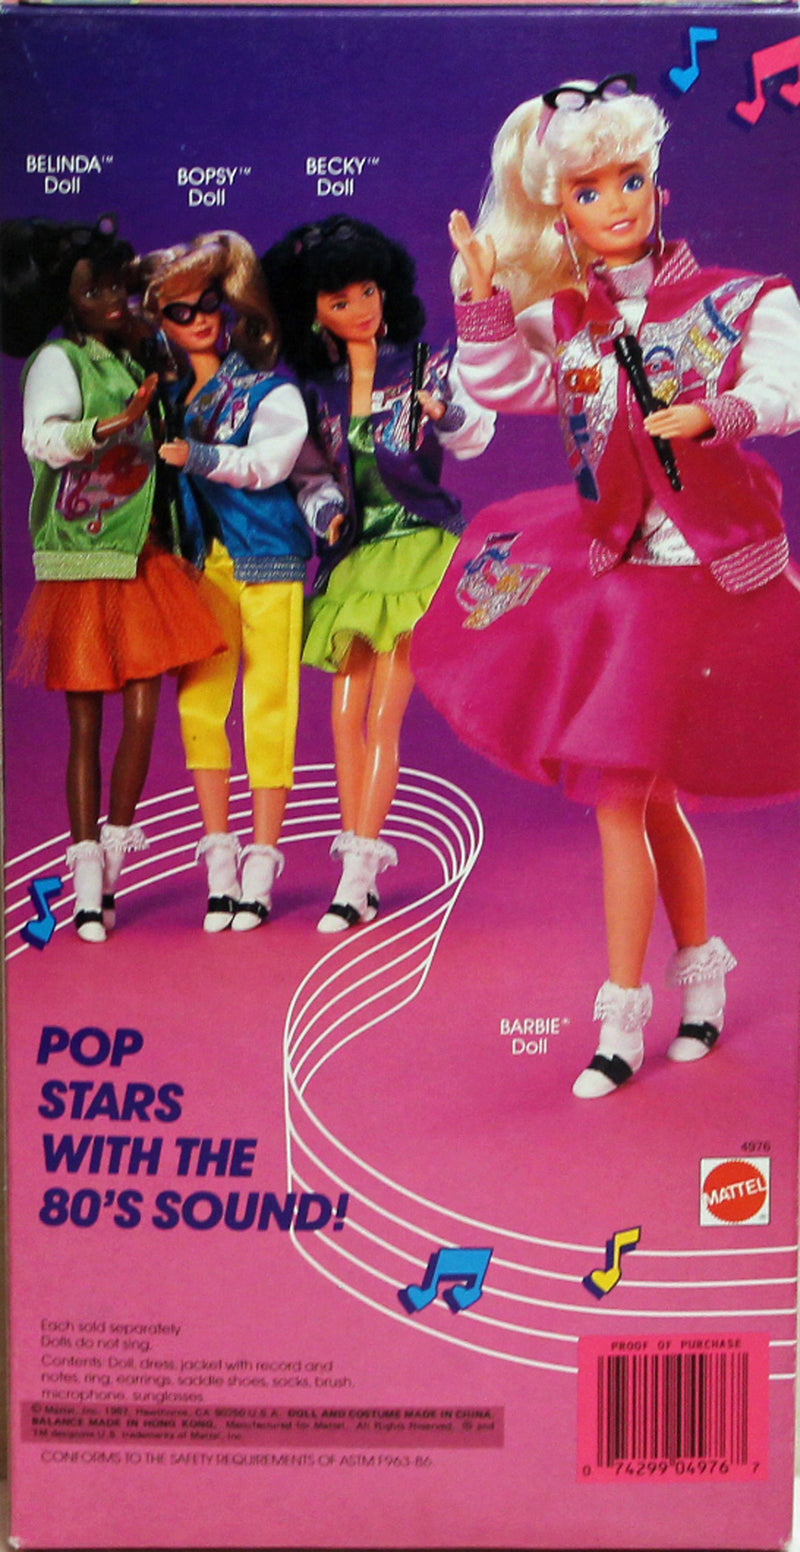 1987 Barbie & the Sensations Belinda Barbie (4976)